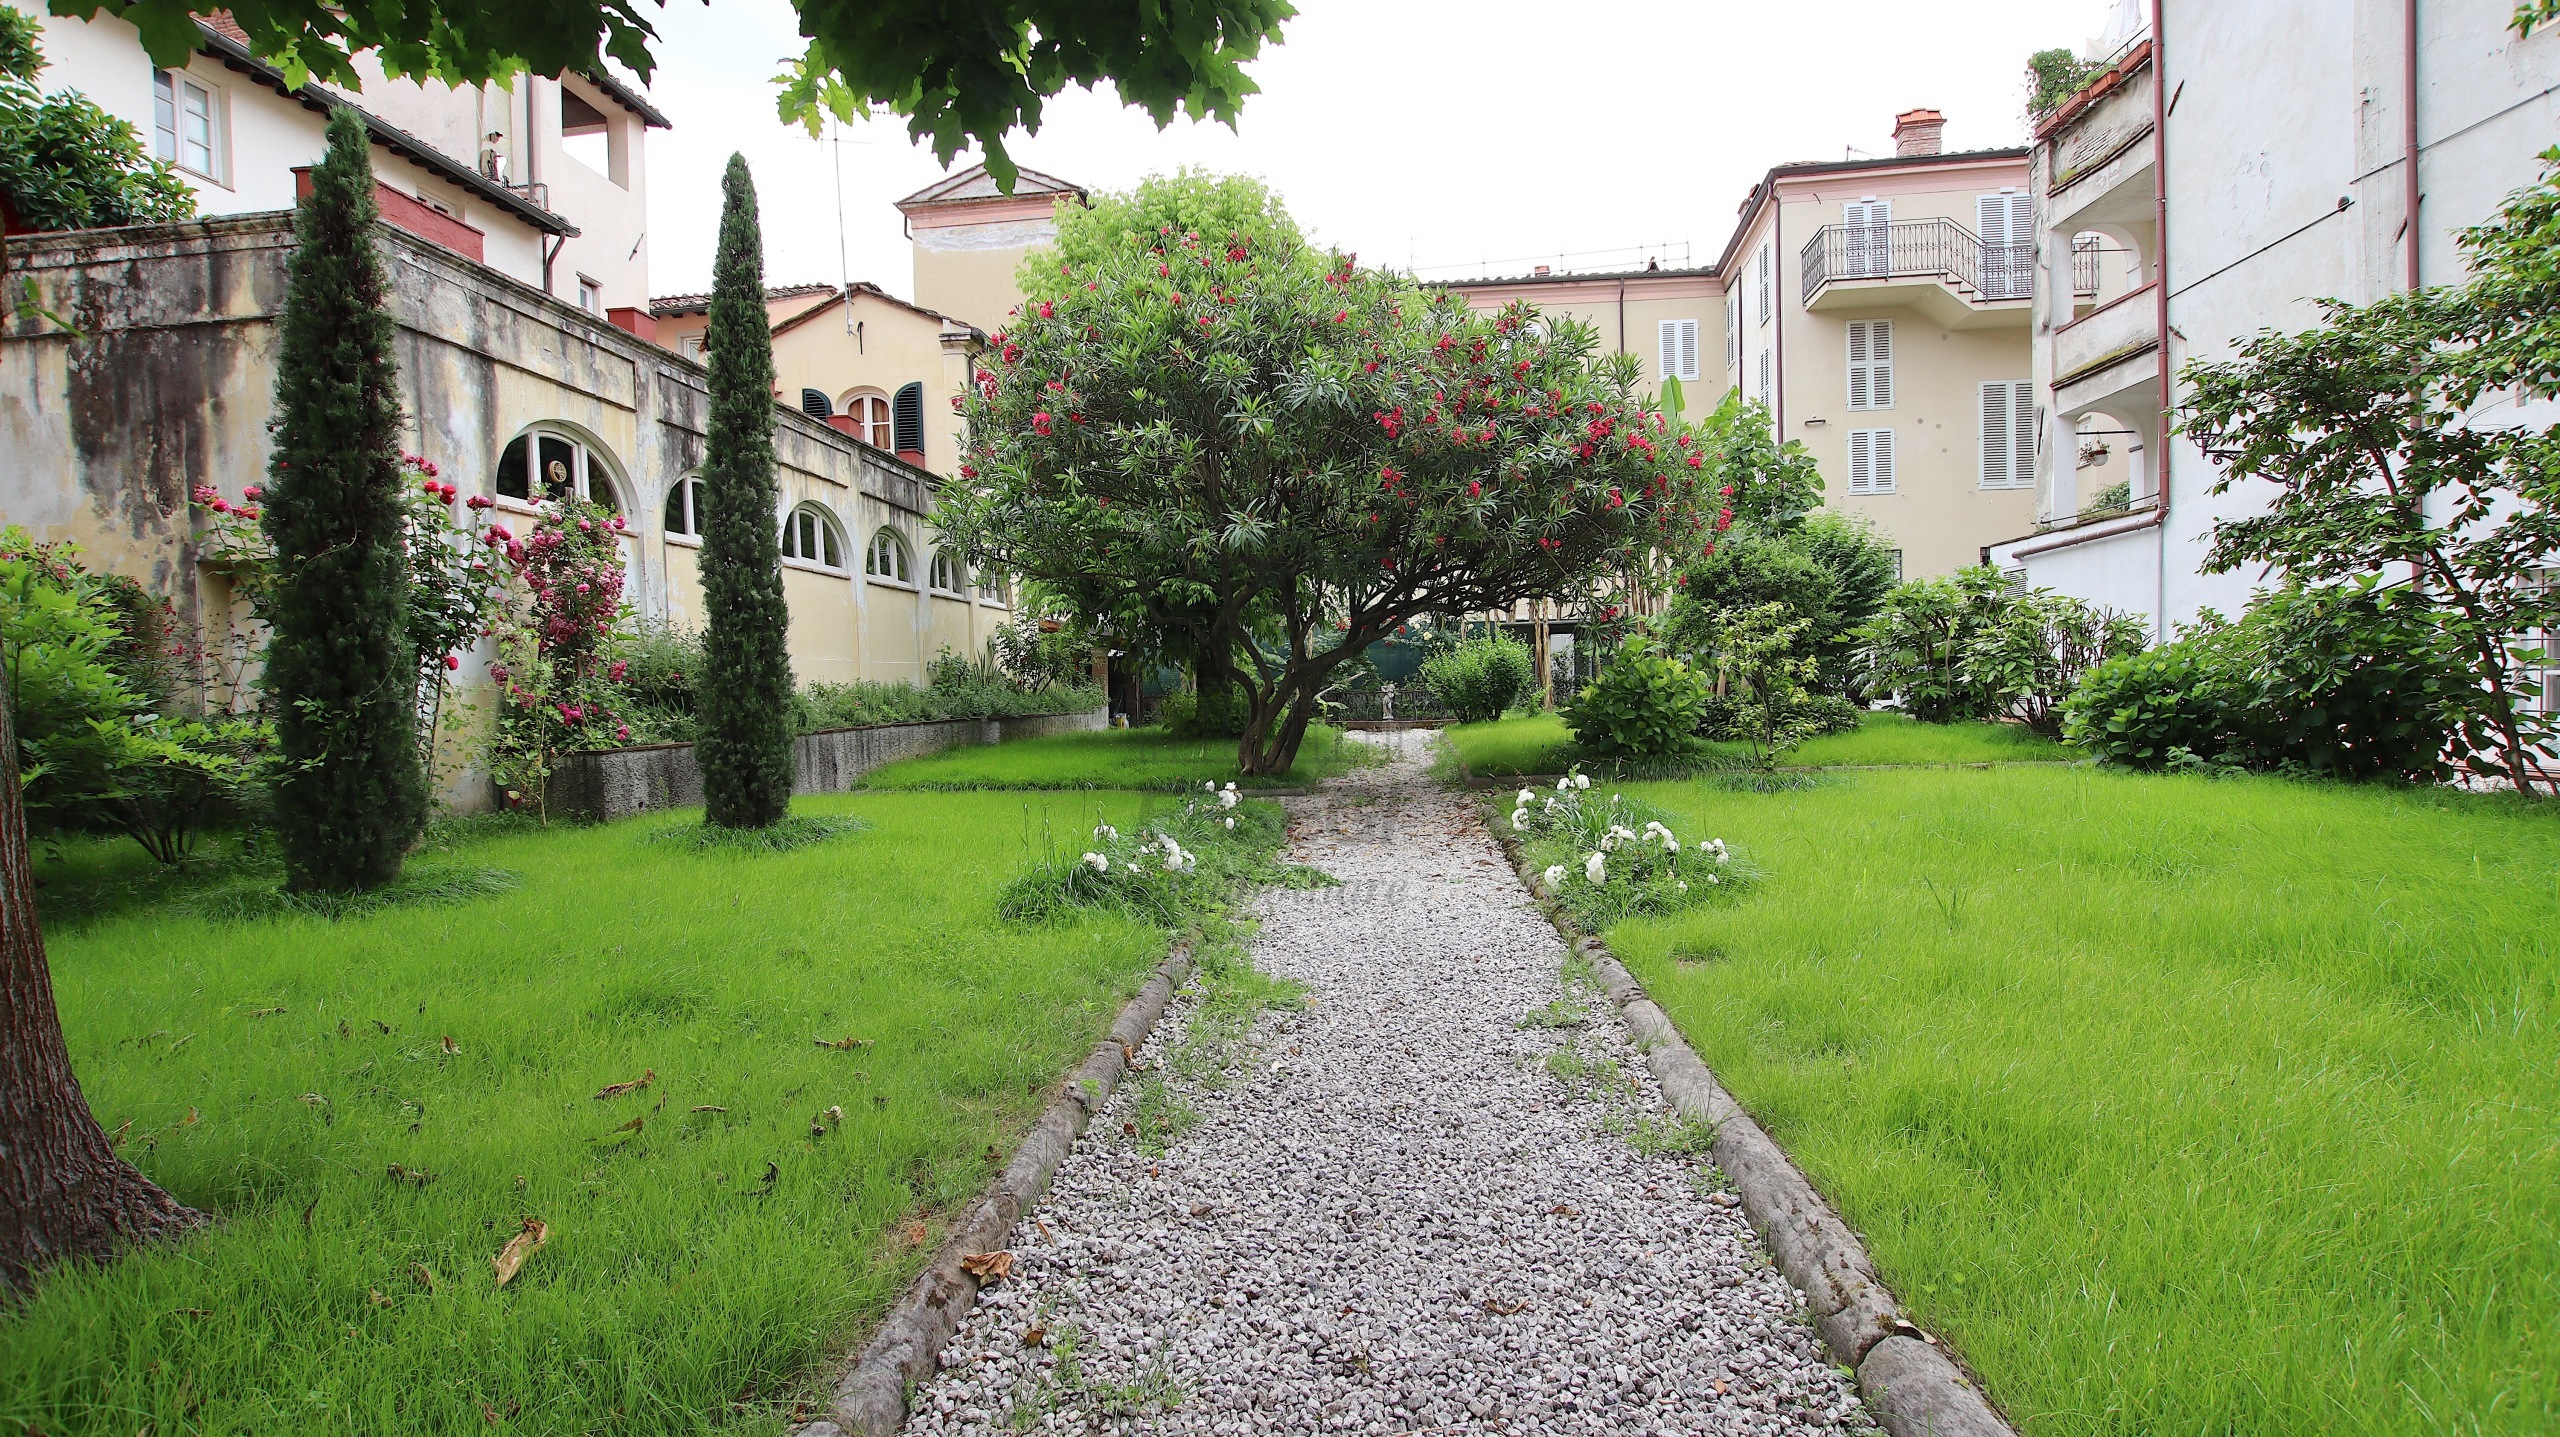 Appartamento con giardino, Lucca centro storico